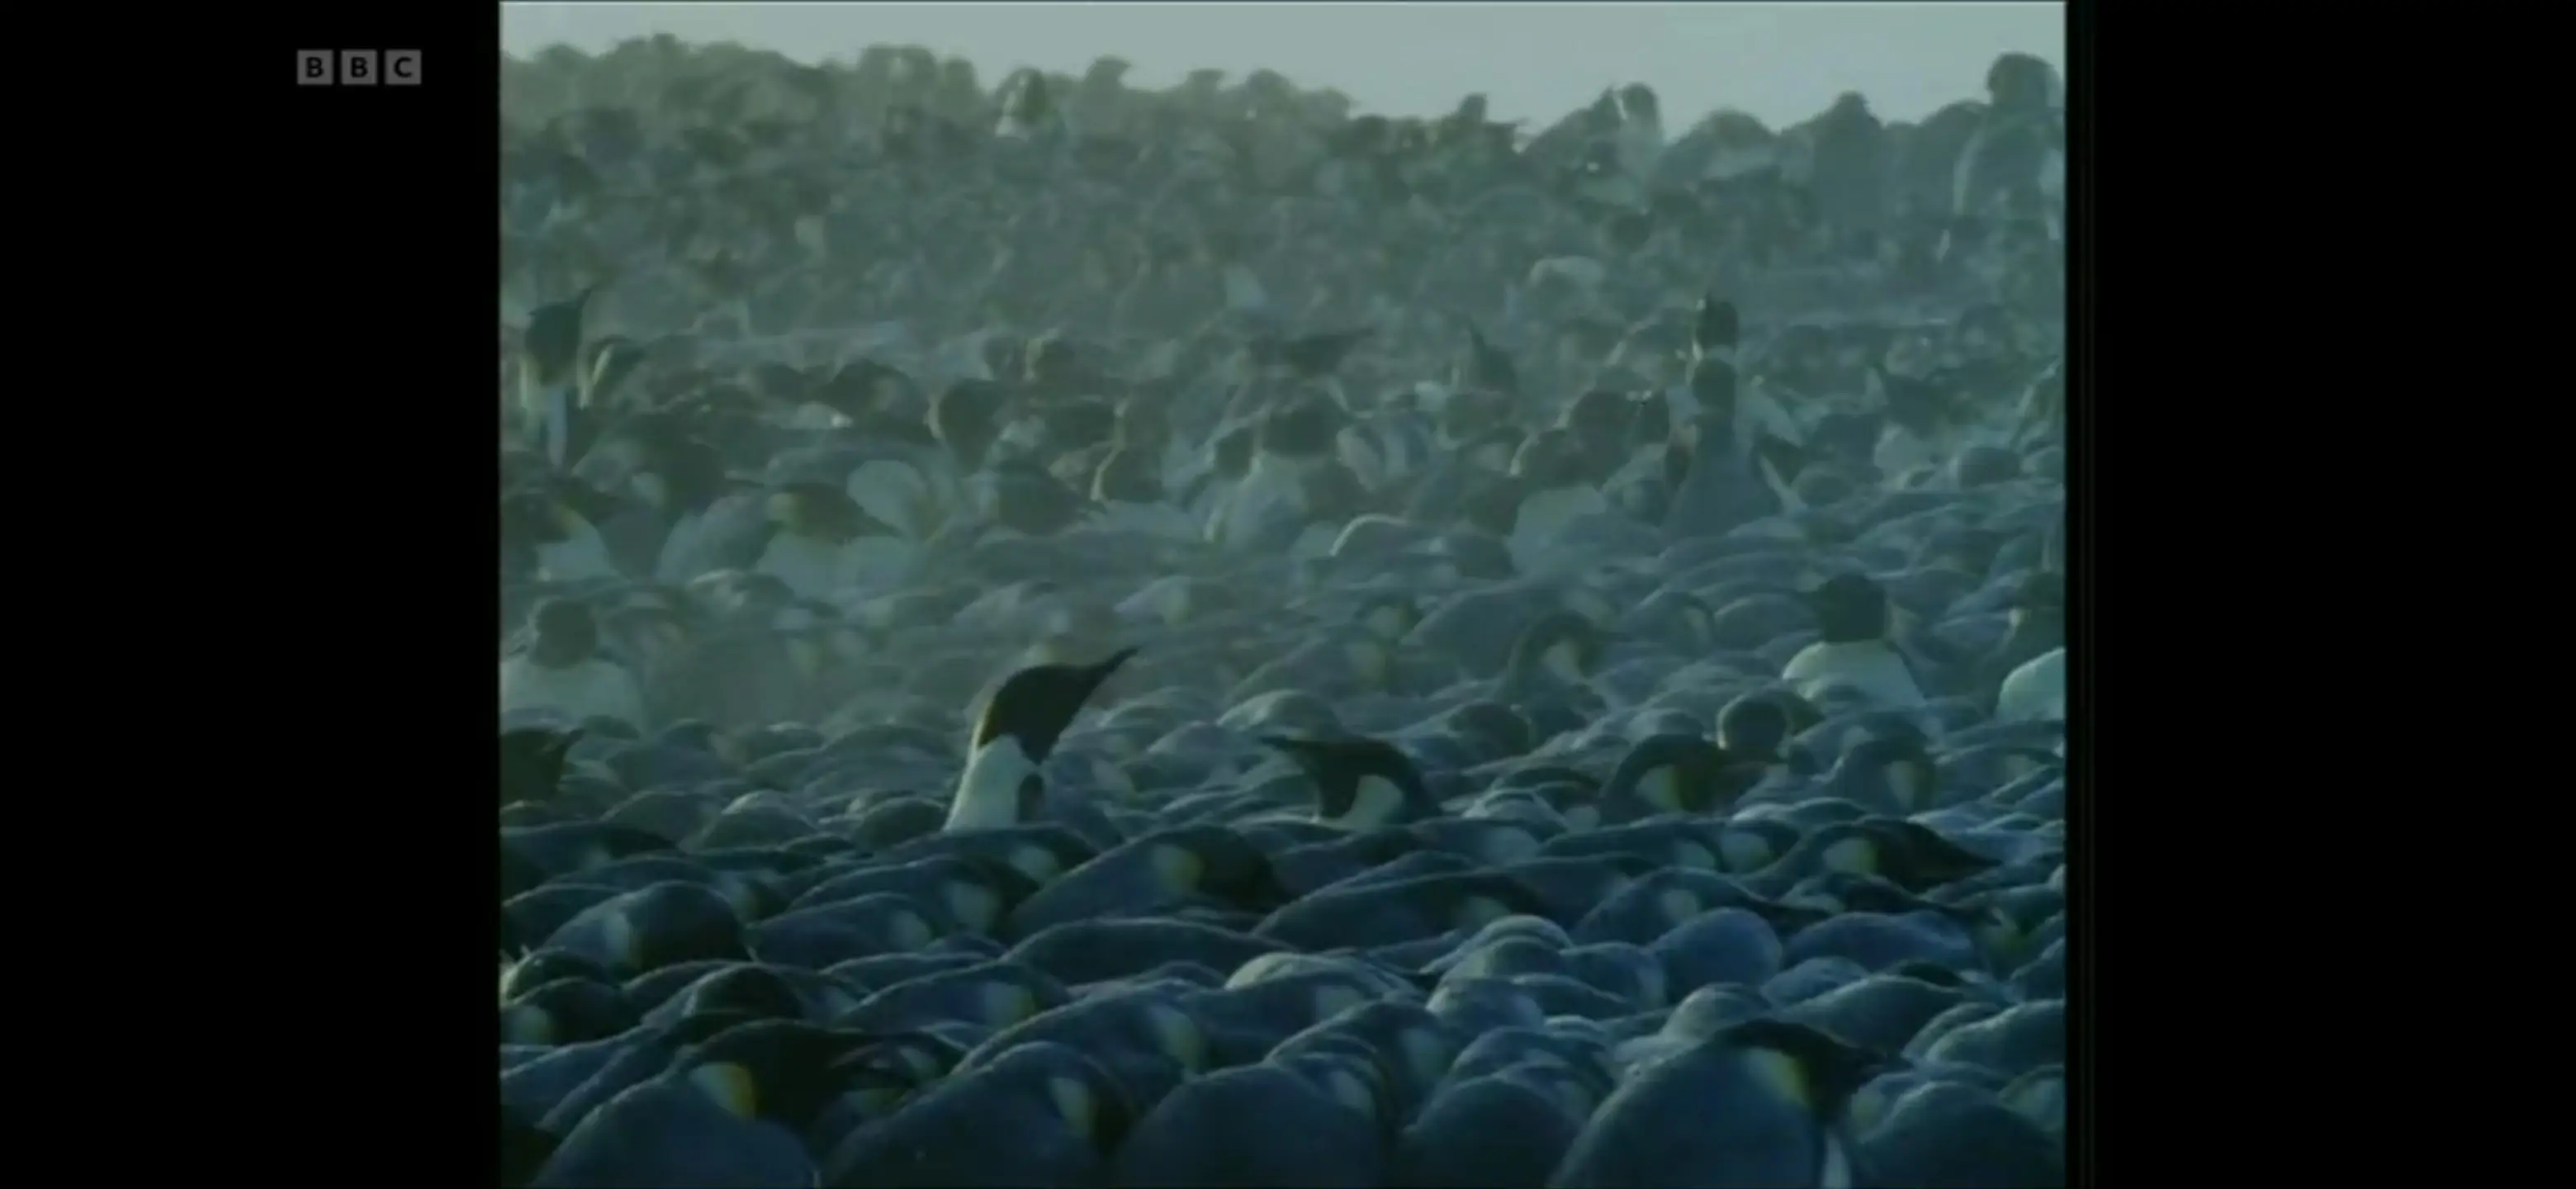 Emperor penguin (Aptenodytes forsteri) as shown in Life in the Freezer - The Bountiful Sea